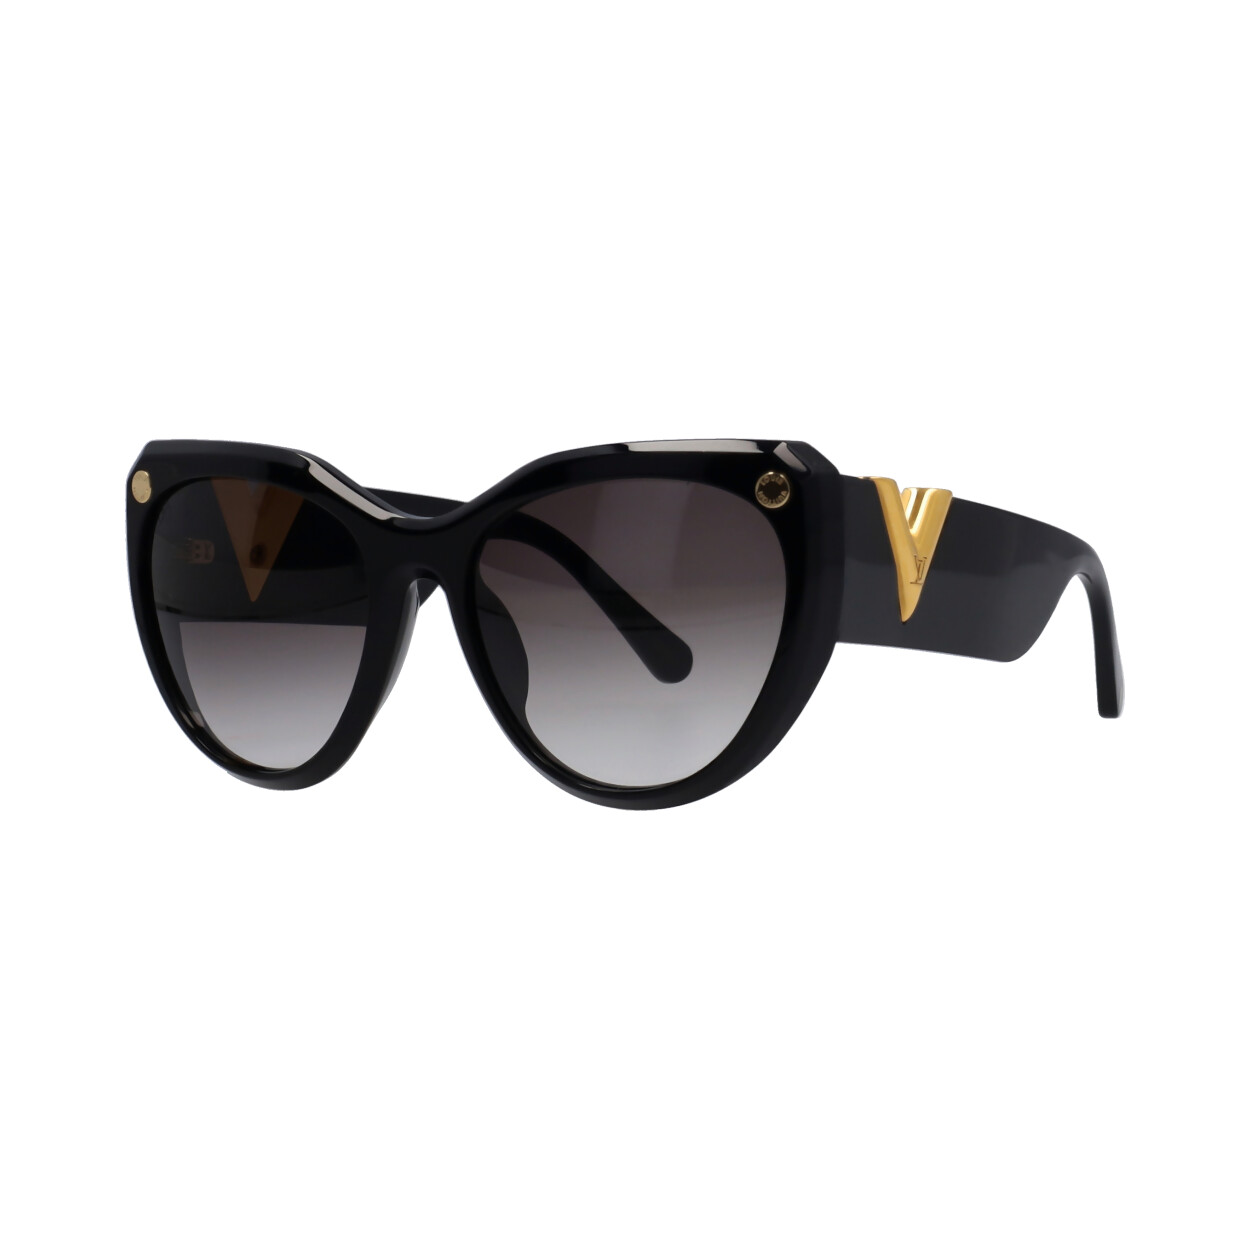 Shop Louis Vuitton 2023 SS My fair lady studs sunglasses by aamitene